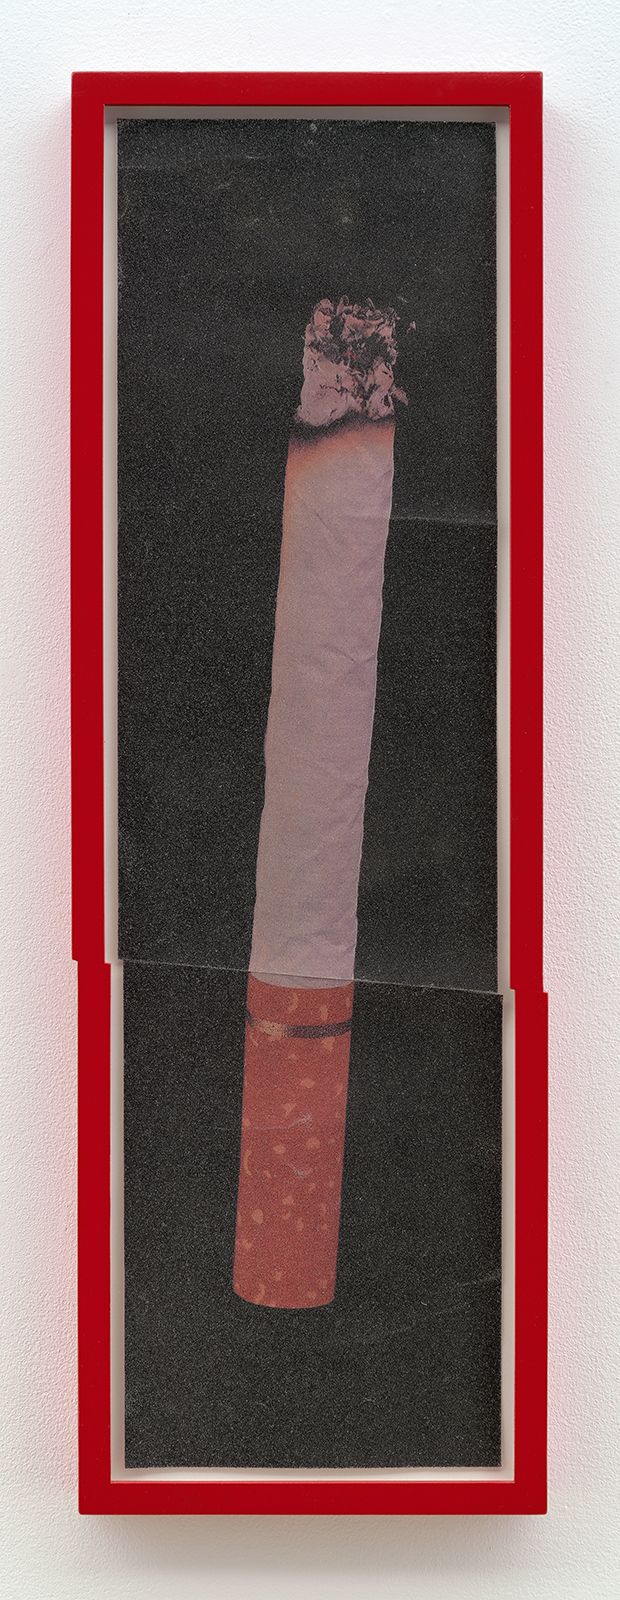 Borna Sammak, Untitled, 2013, Roofie's grip tape, framed, 33 × 11 × 2 in.